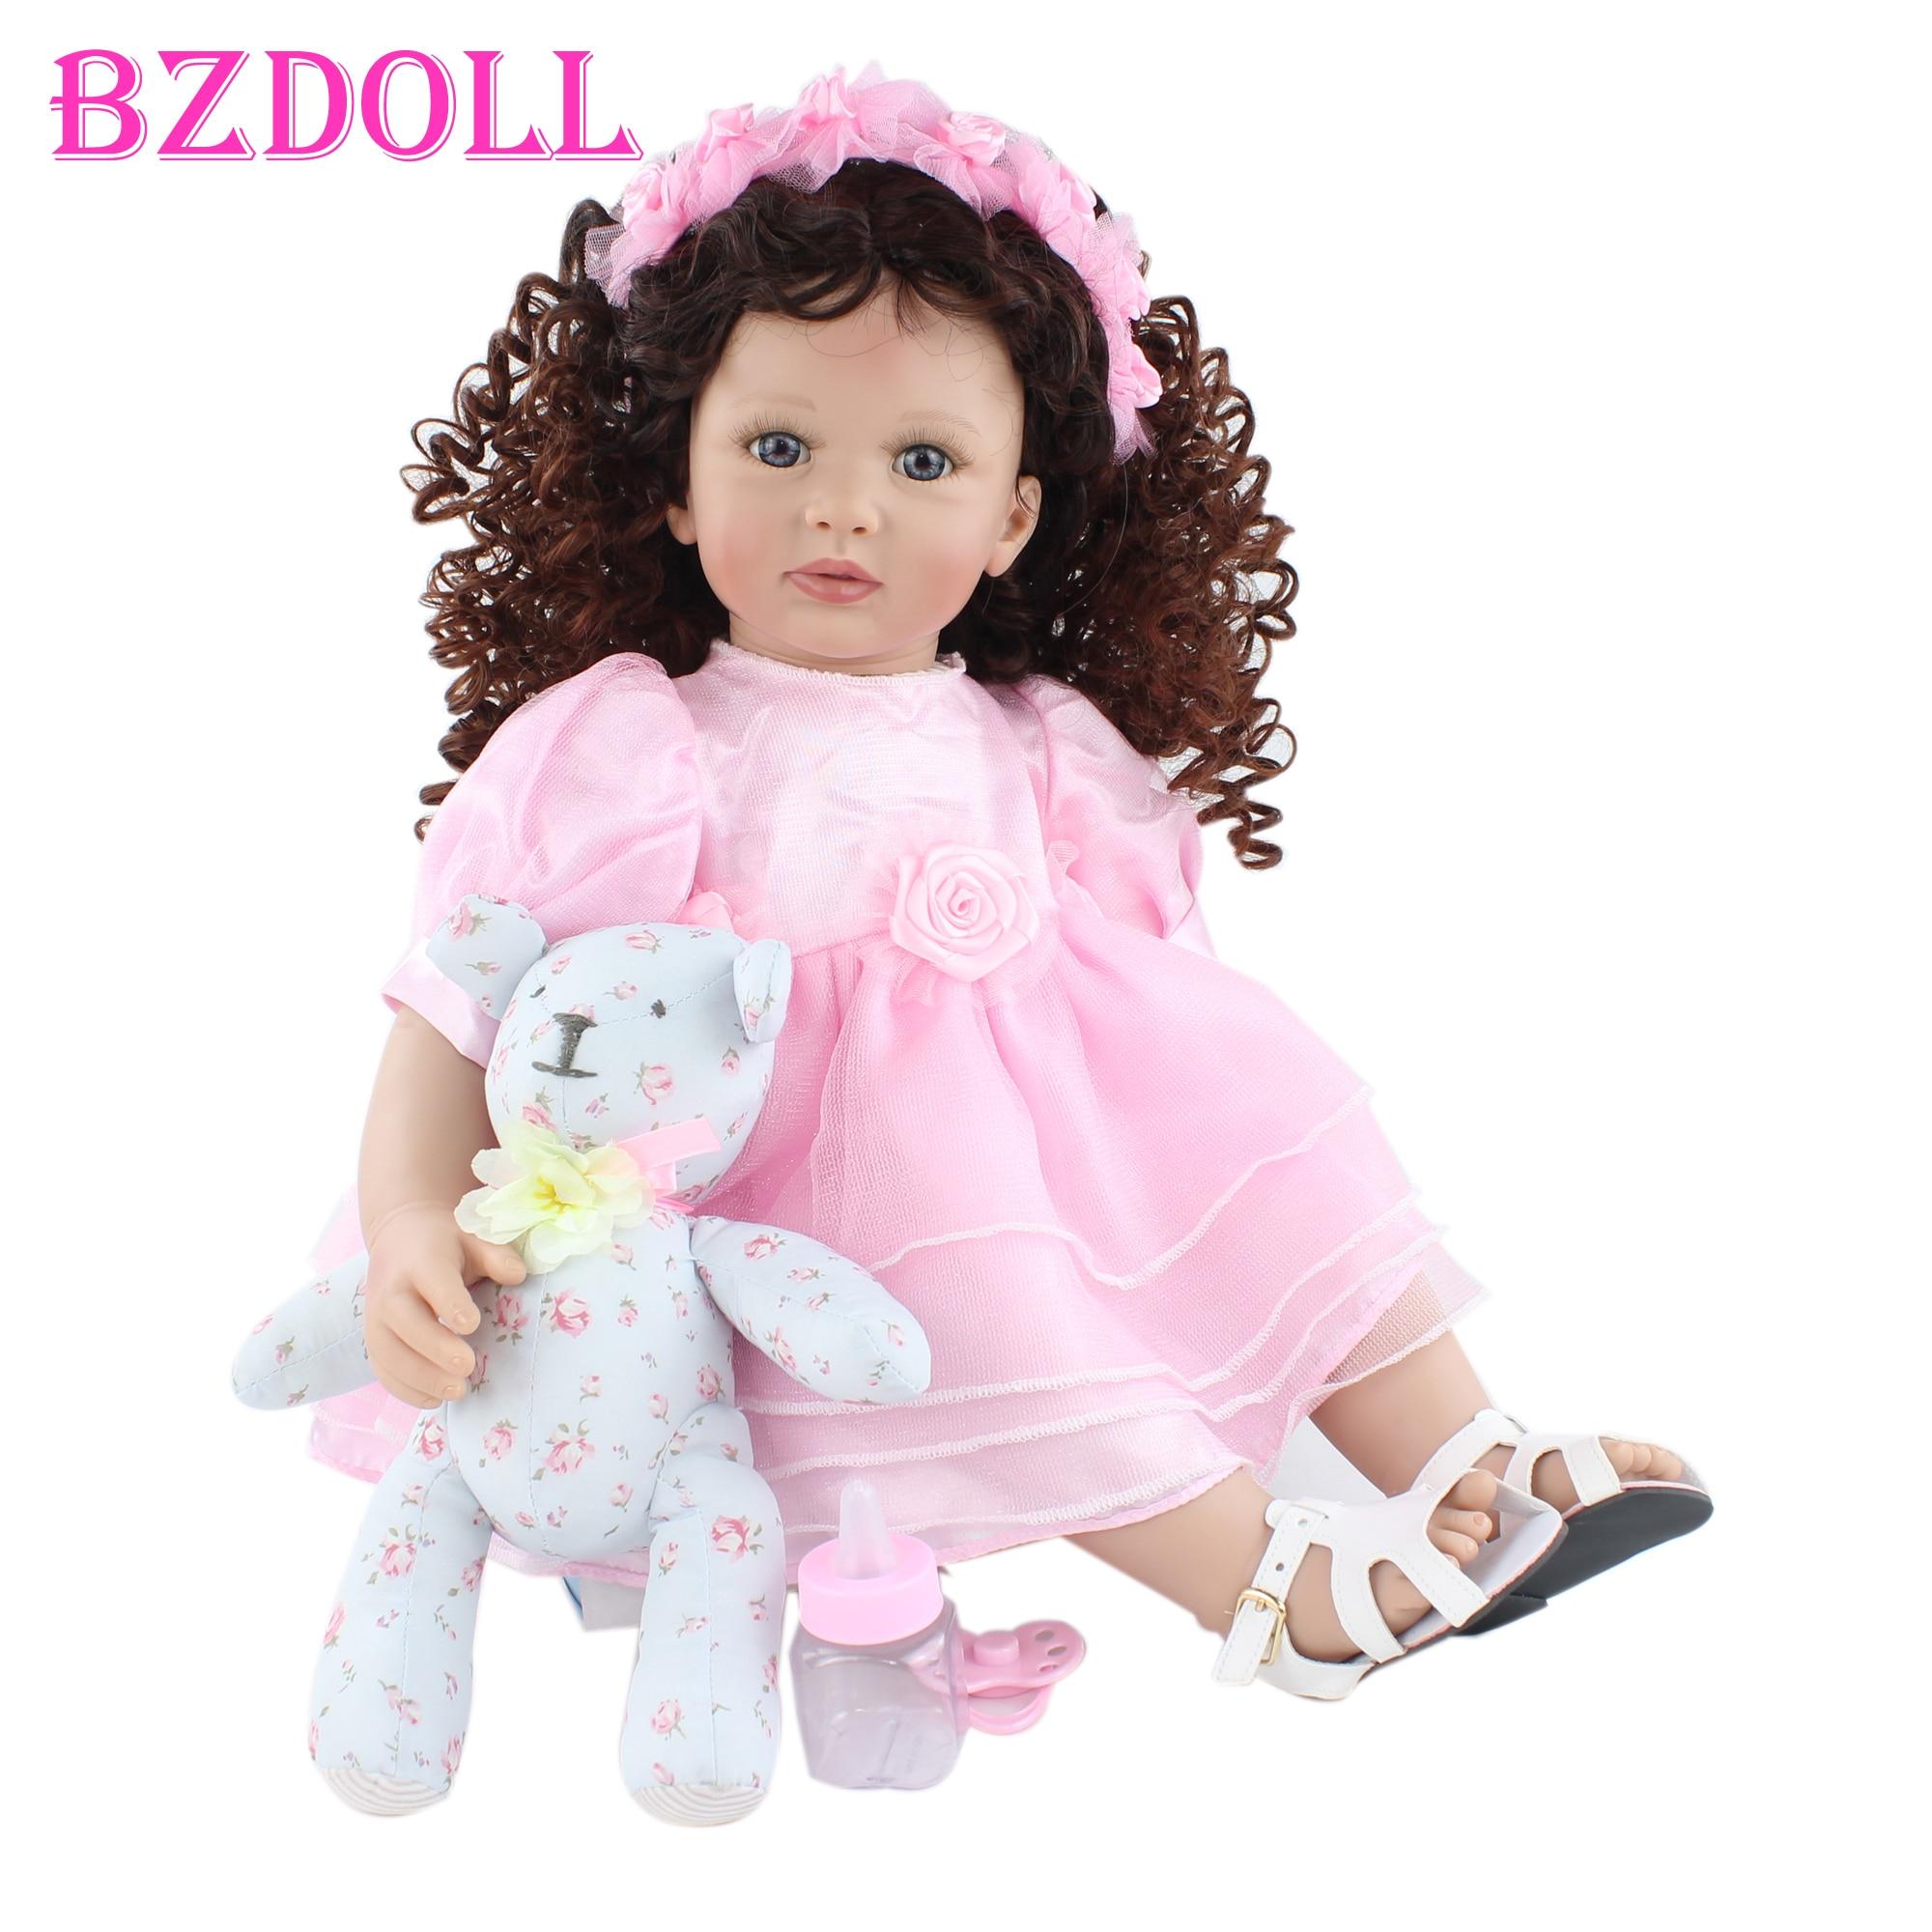 BZDOLL Reborn BZDOLL 60cm Soft Silicone Reborn Toddler Doll For Girl Cloth Body Pink Dress Princess Baby Lovely Kids Birthday Gift Play House Toy